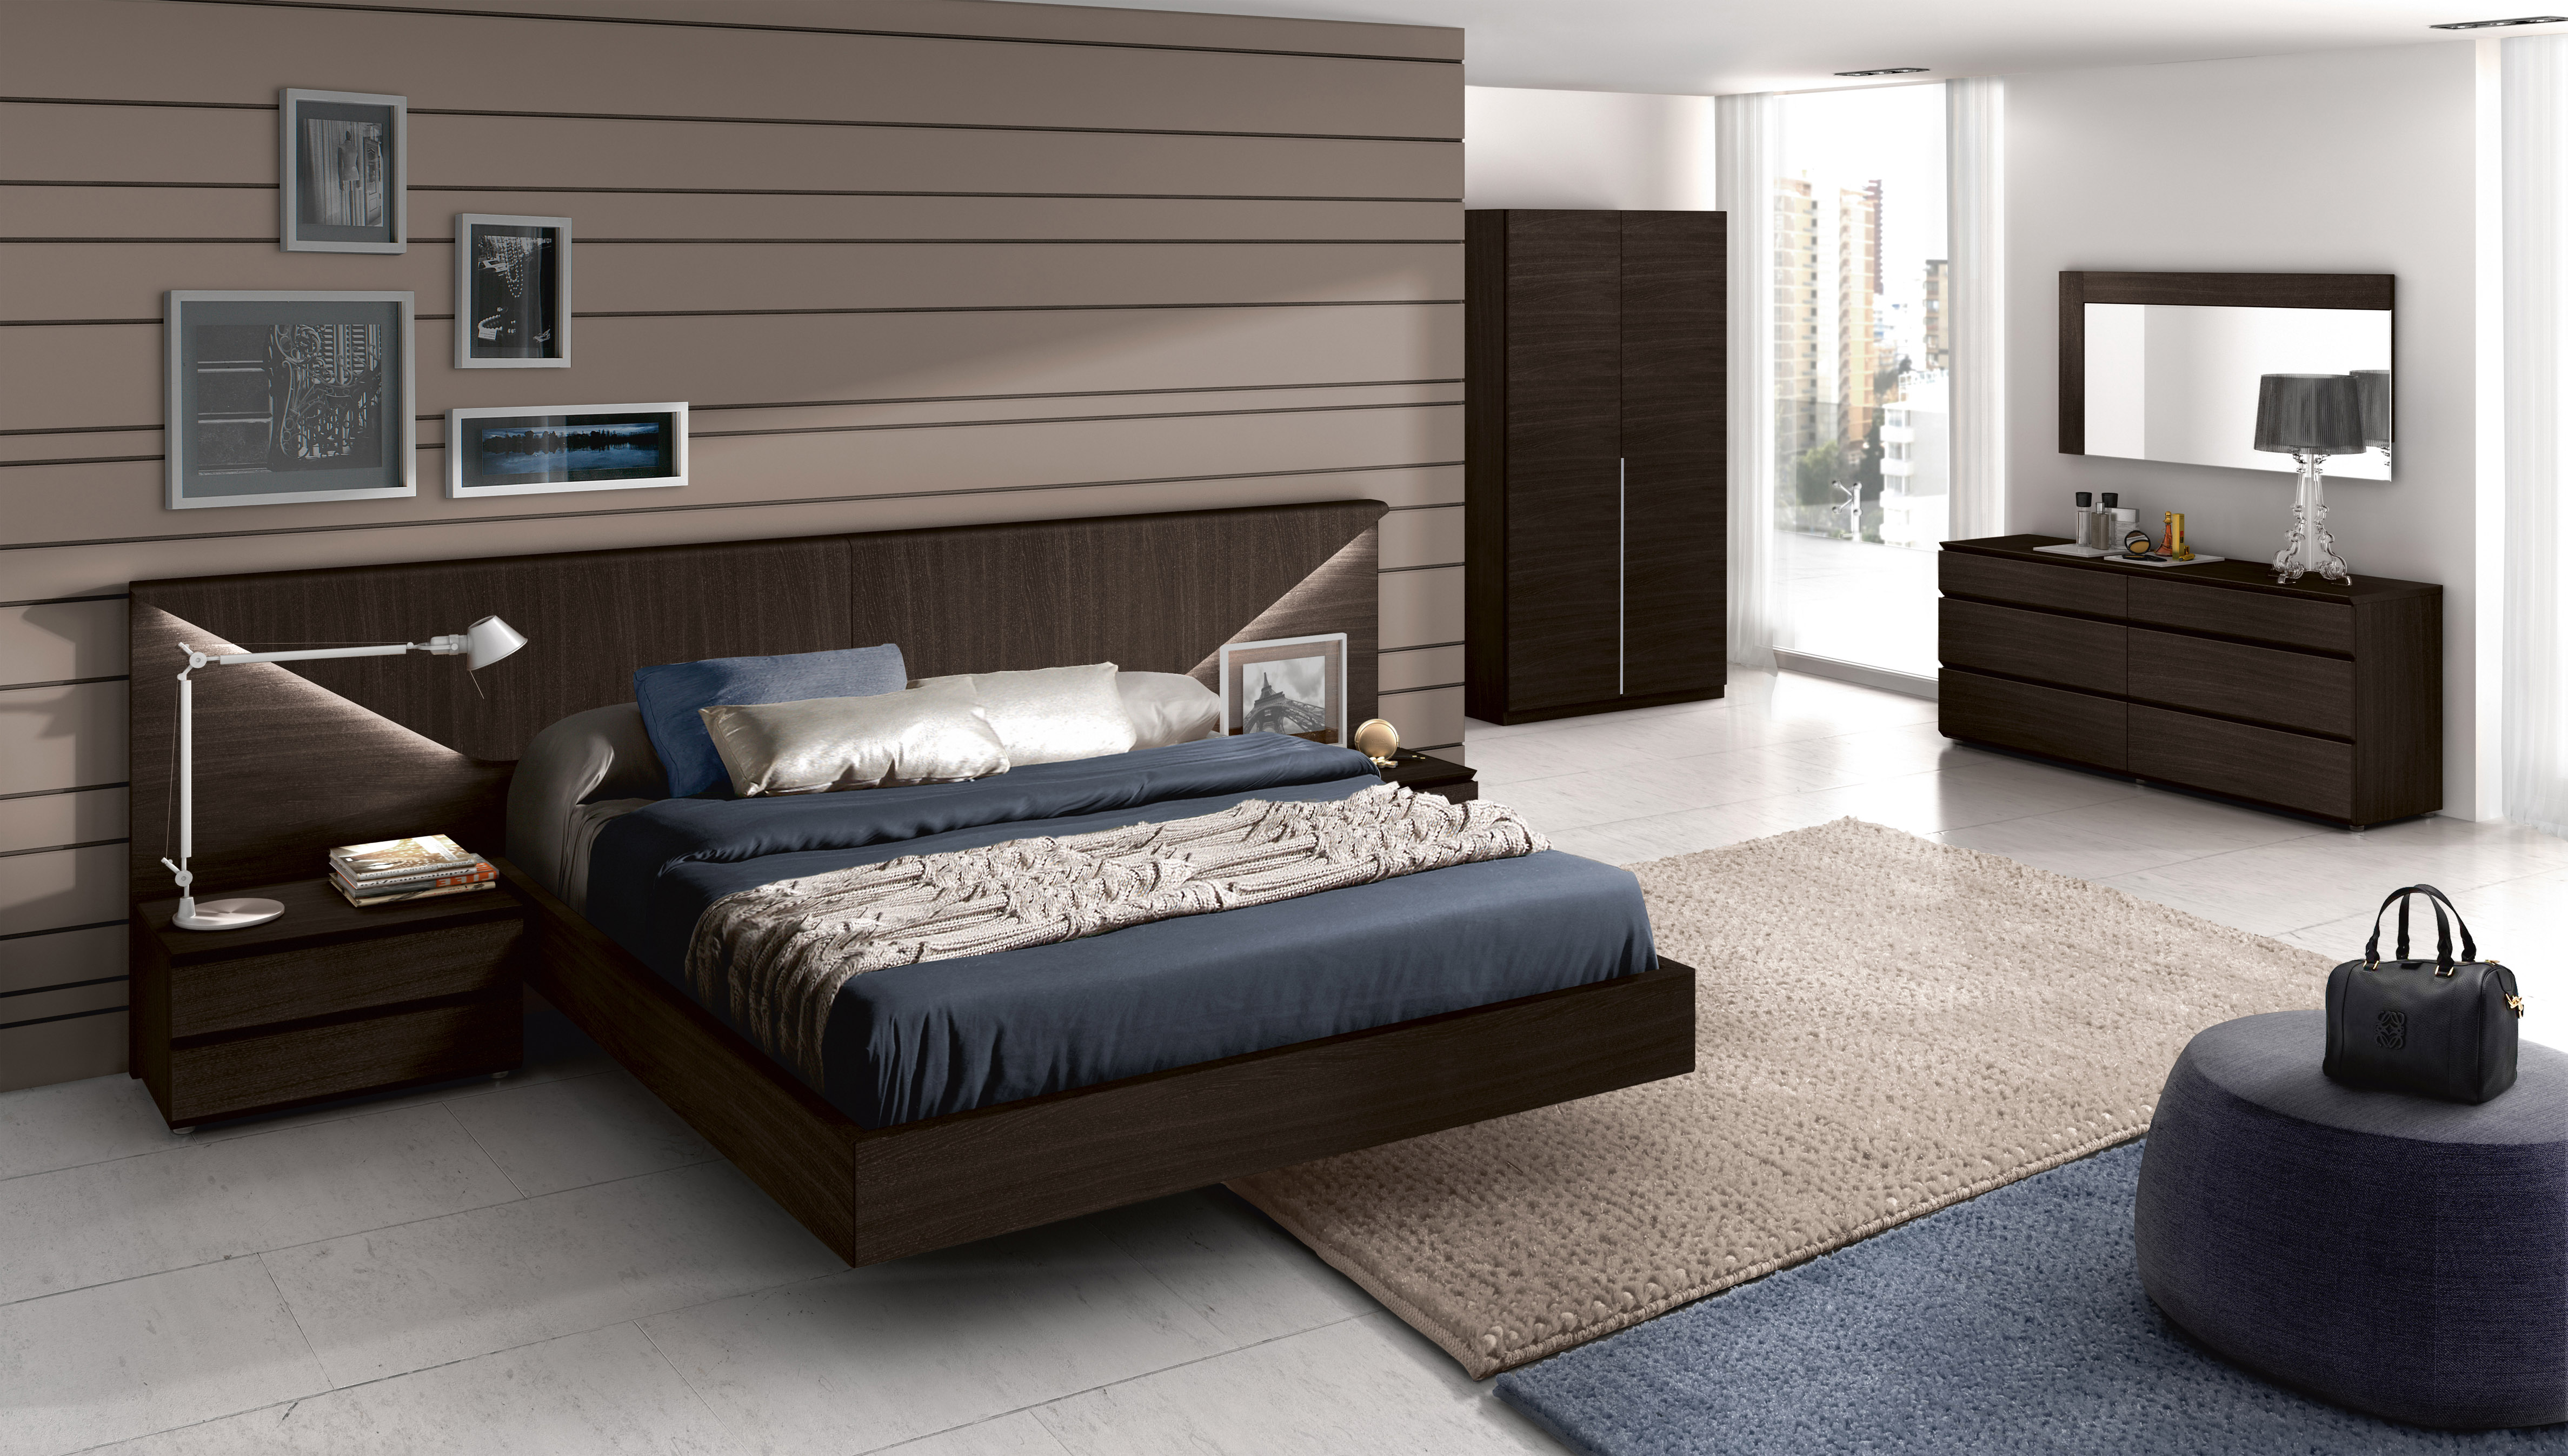 stylish bedroom furniture designs